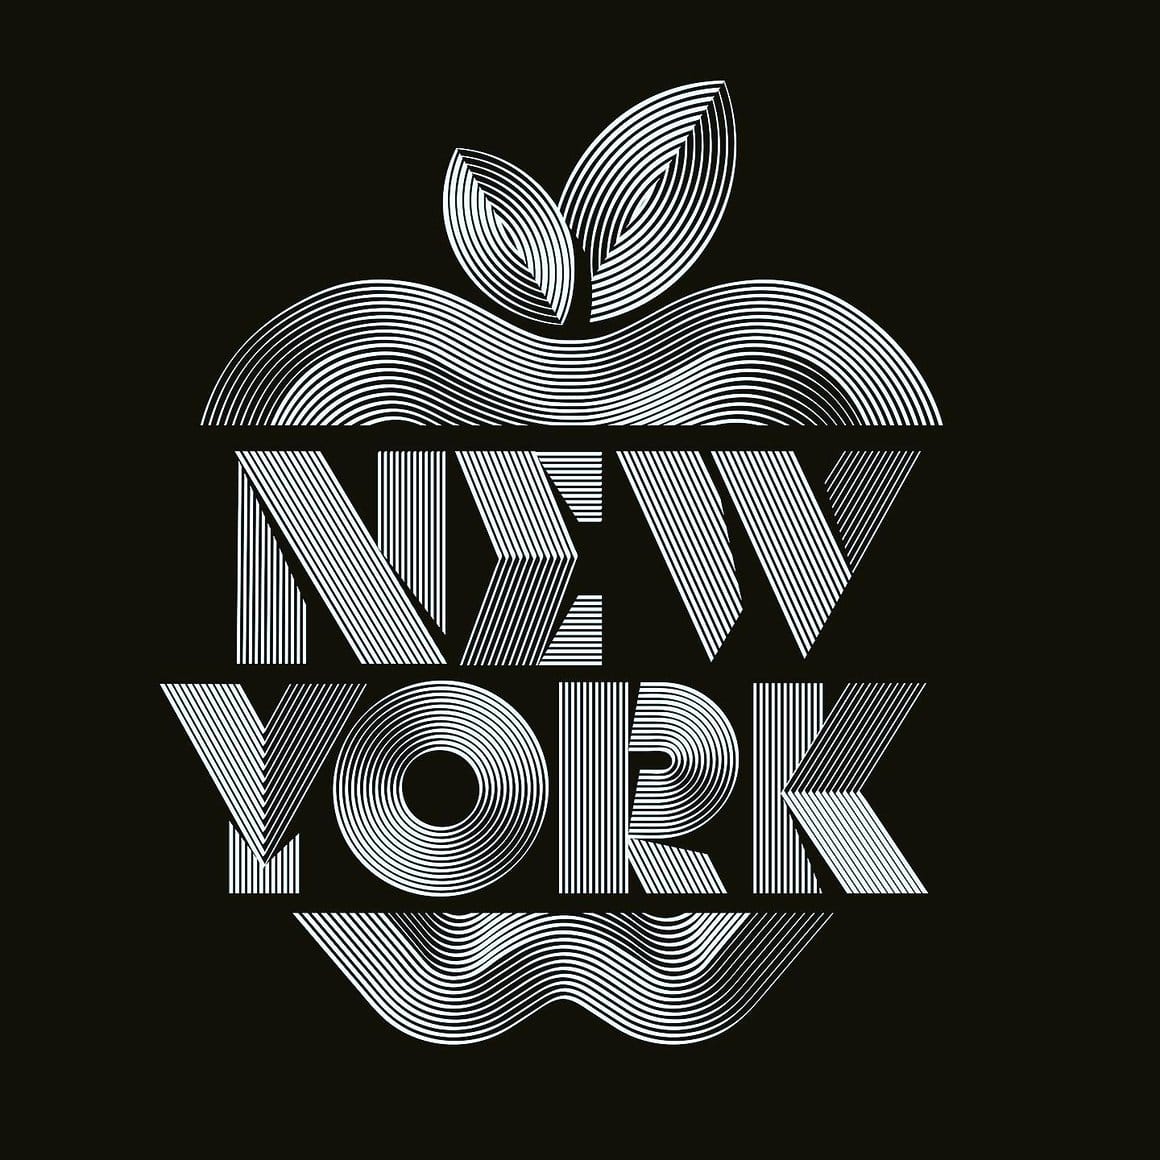  New York typographie